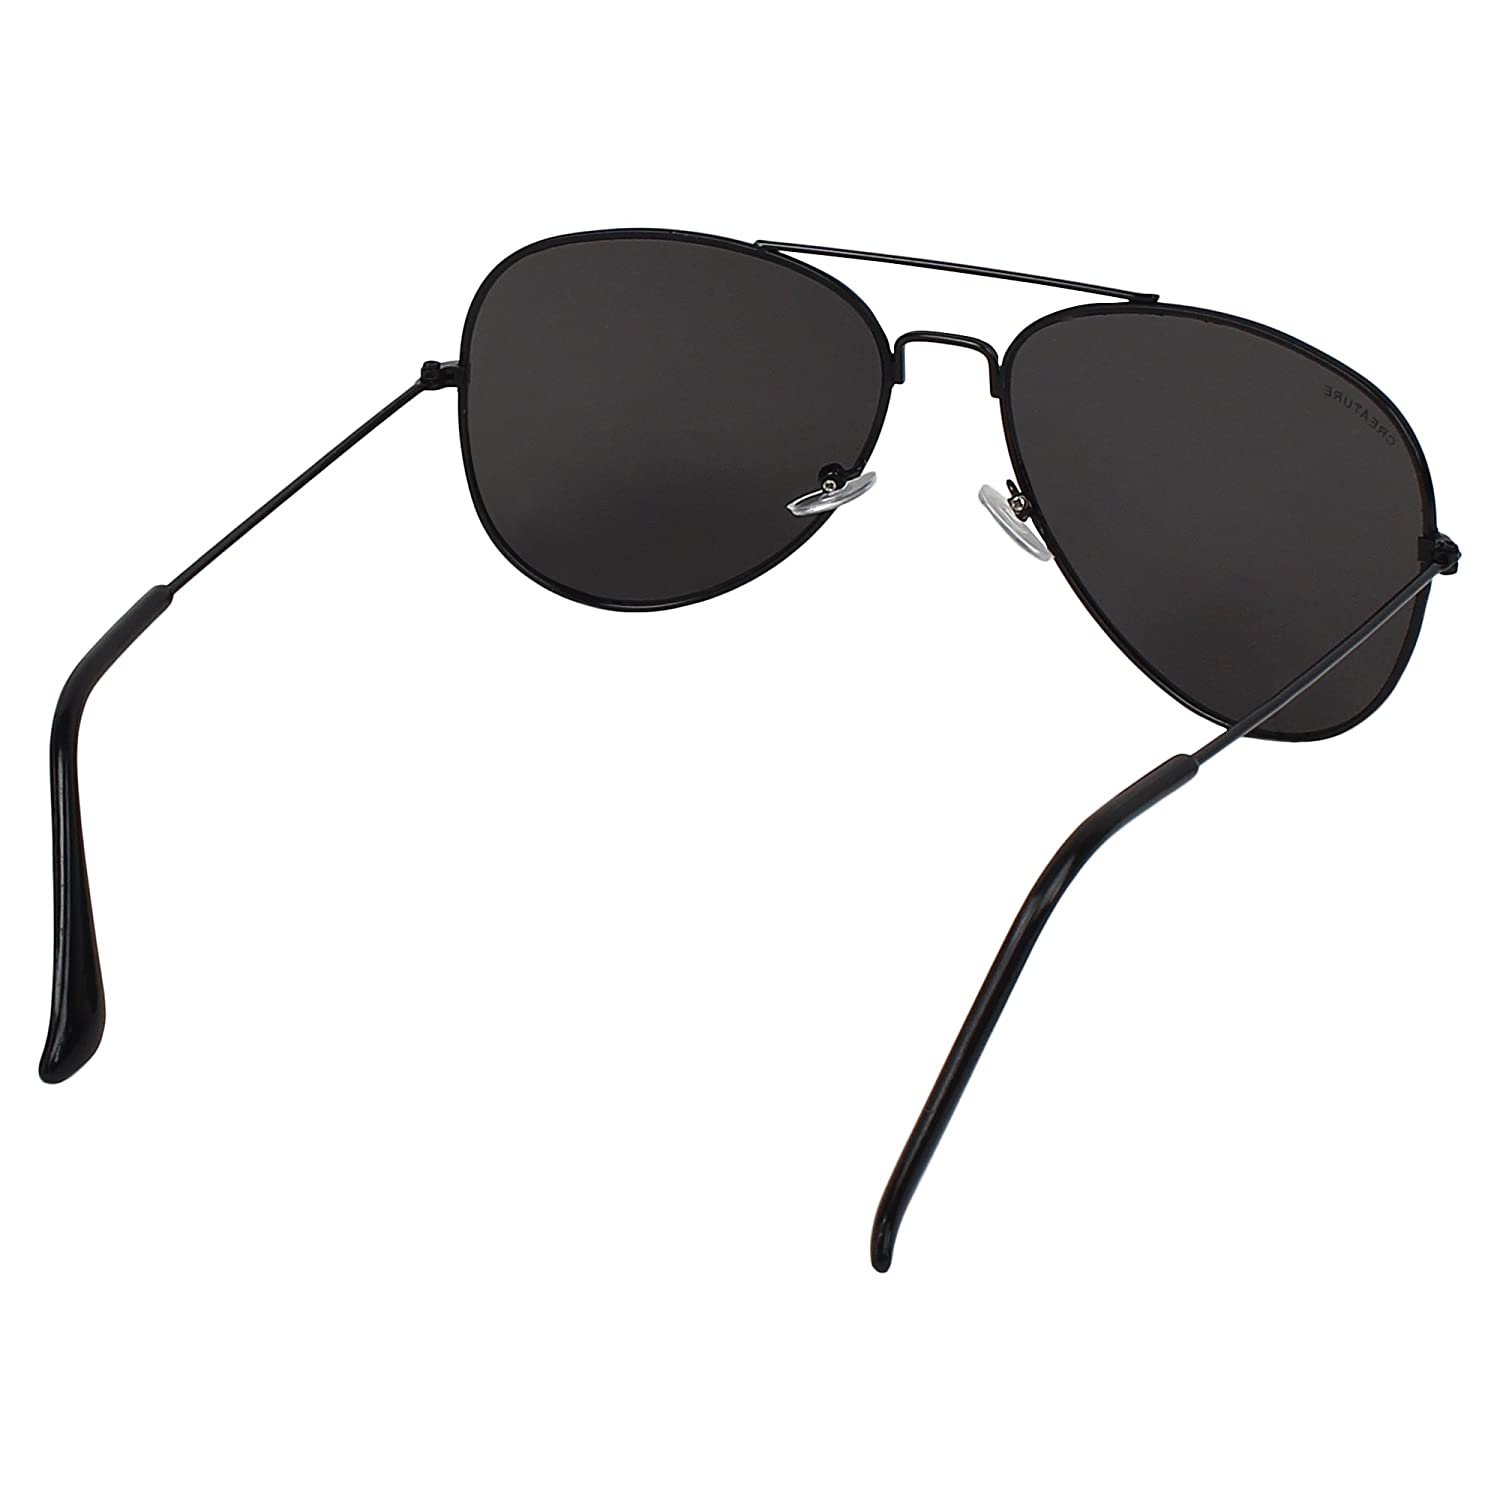 https://shoppingyatra.com/product_images/CREATURE Basic Black Aviator Uv-Protected Unisex Sunglasses3.jpg